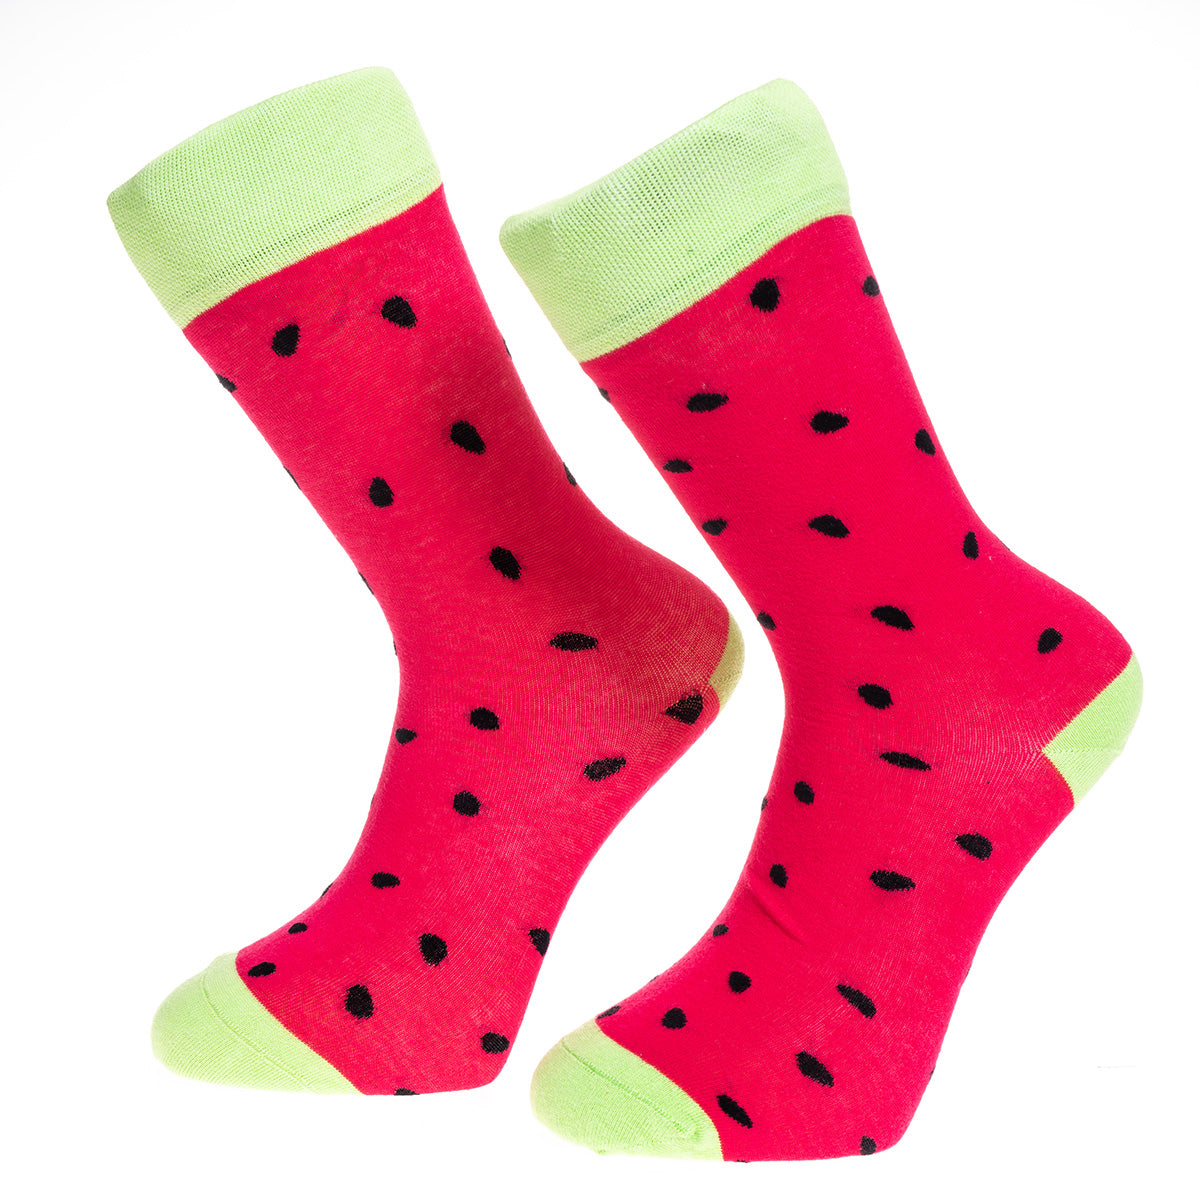 Pink Printed-European Made - Egyptian Cotton Socks - Premium Cotton Fun socks with Soft Elastic